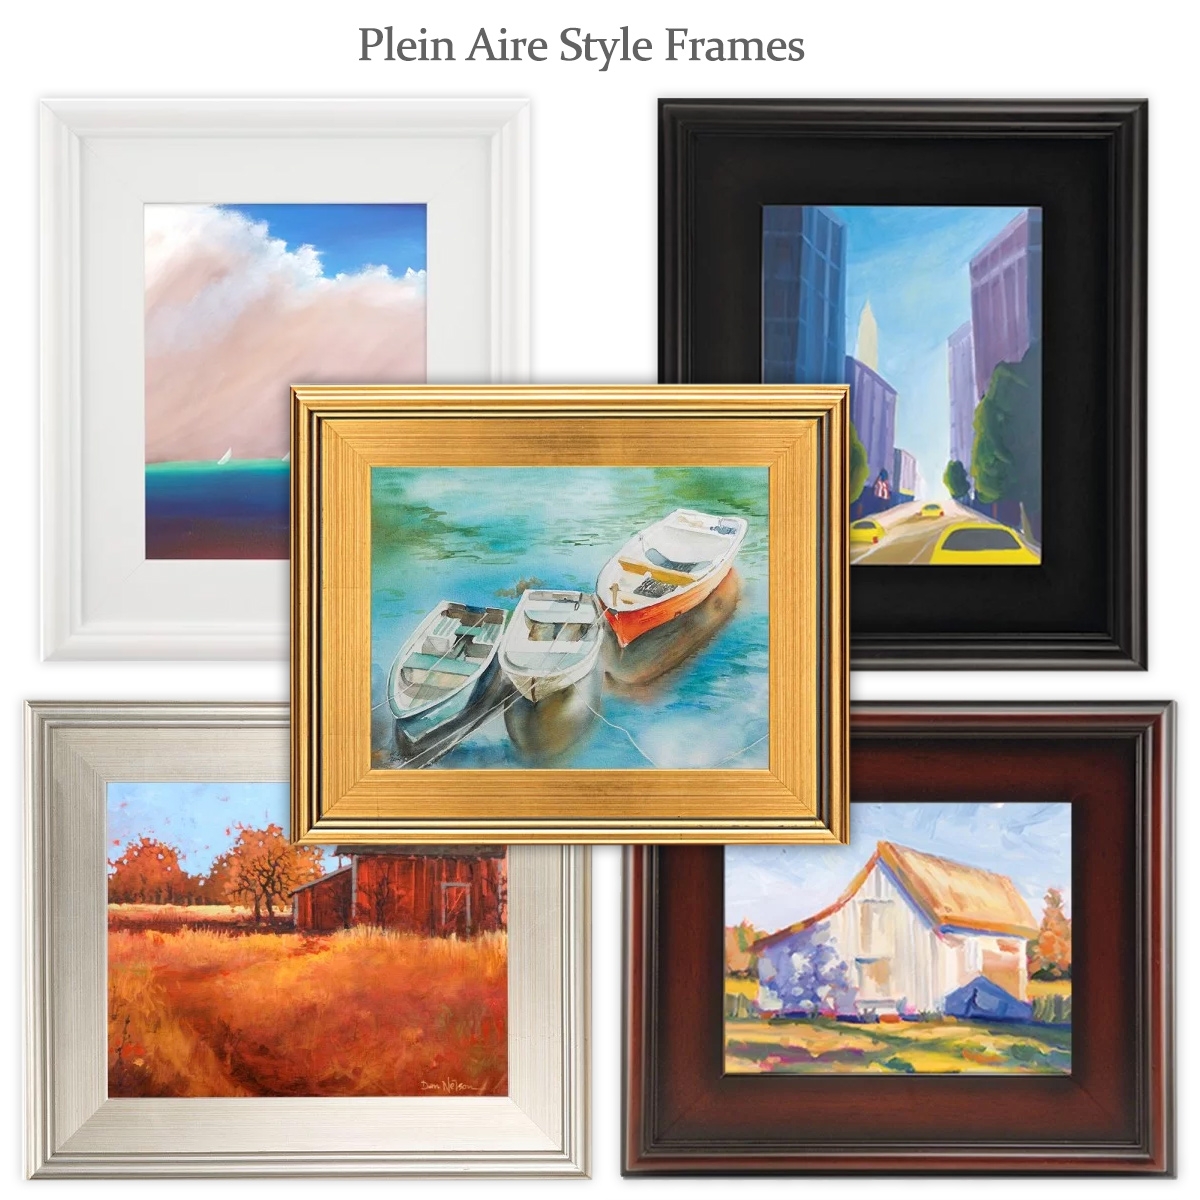 Plein Aire Style Frames